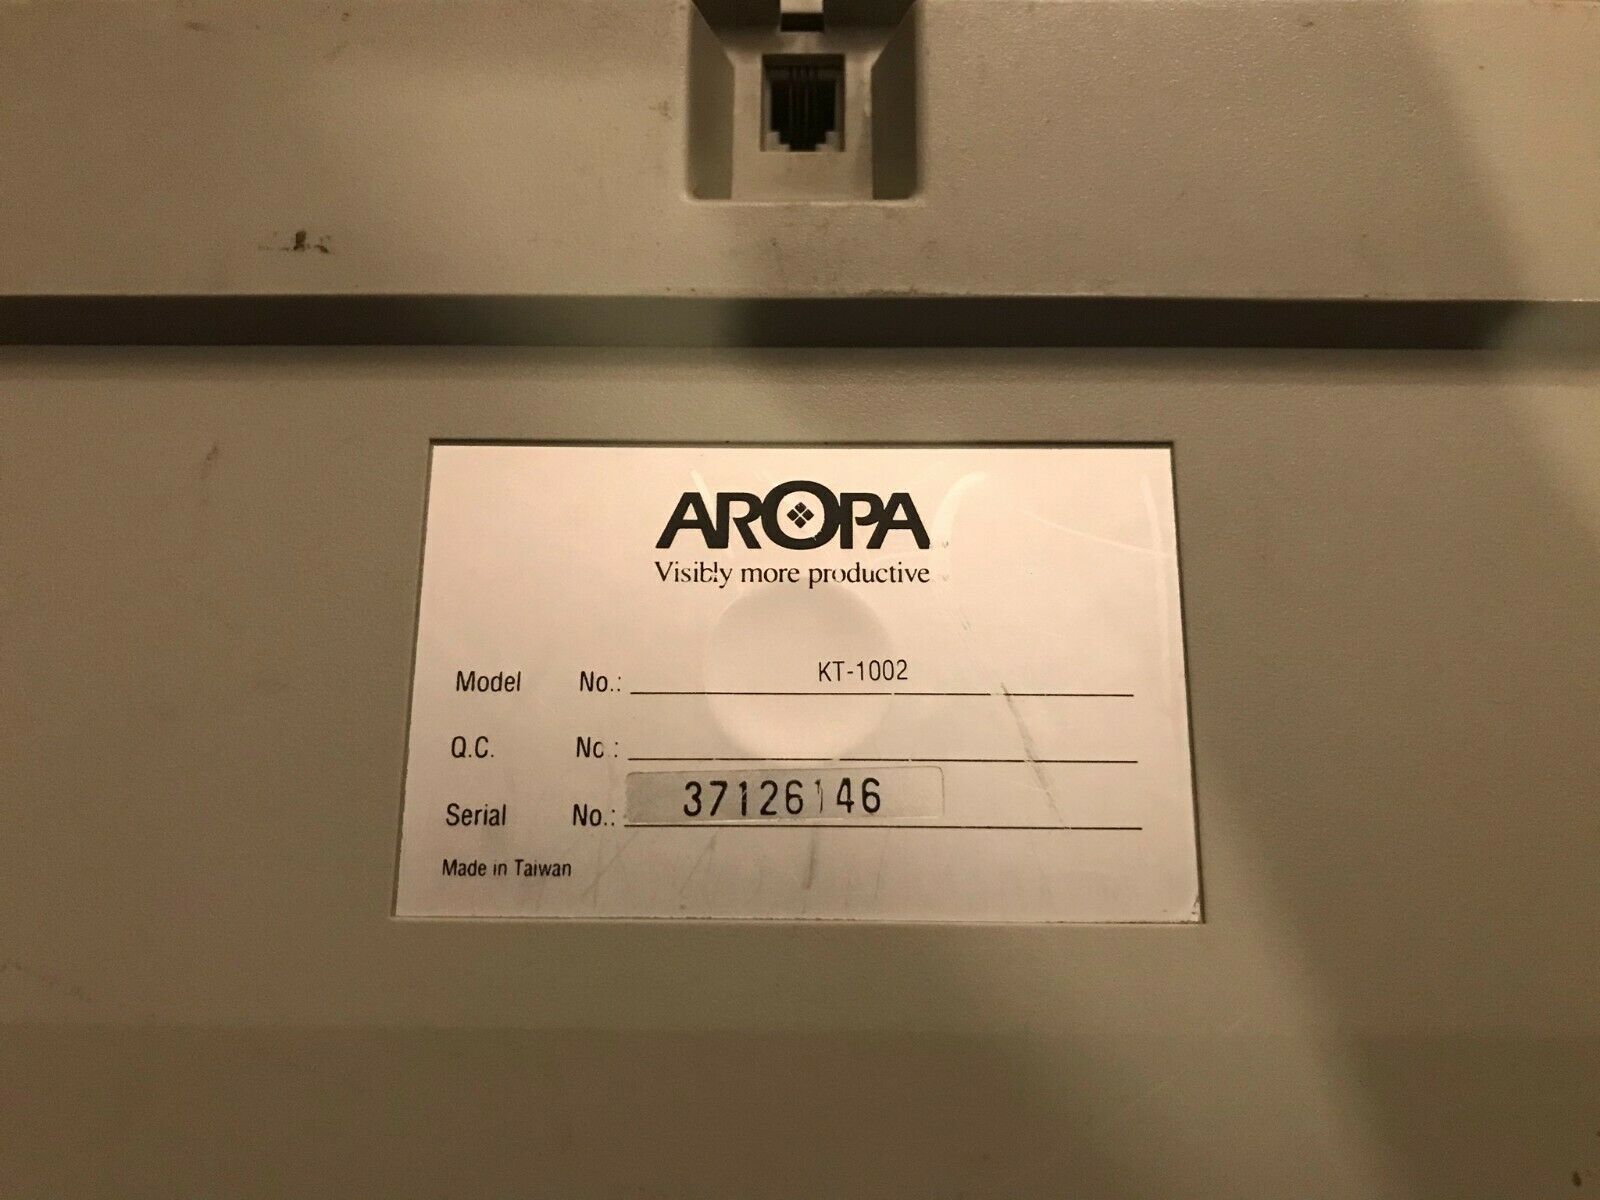 aropa label.jpg